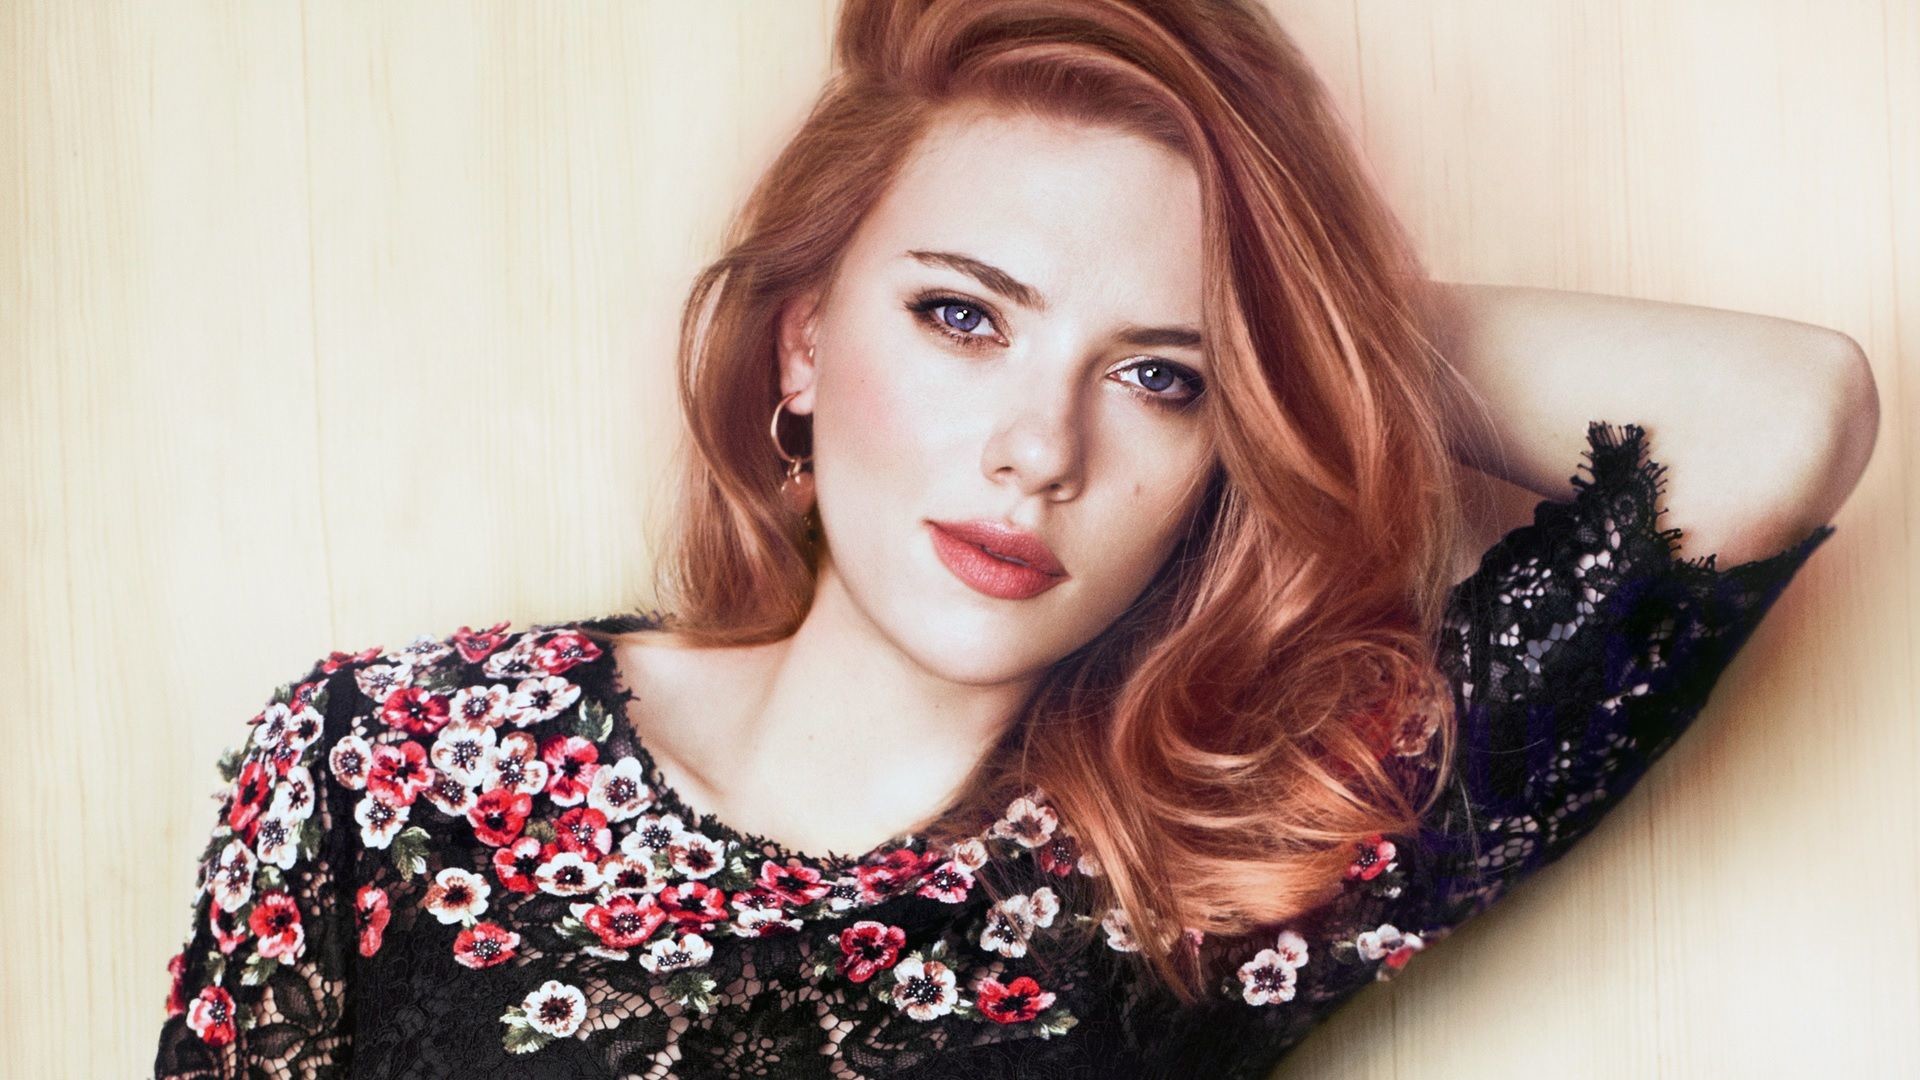 Wallpaper Scarlett Johansson Wallpapers